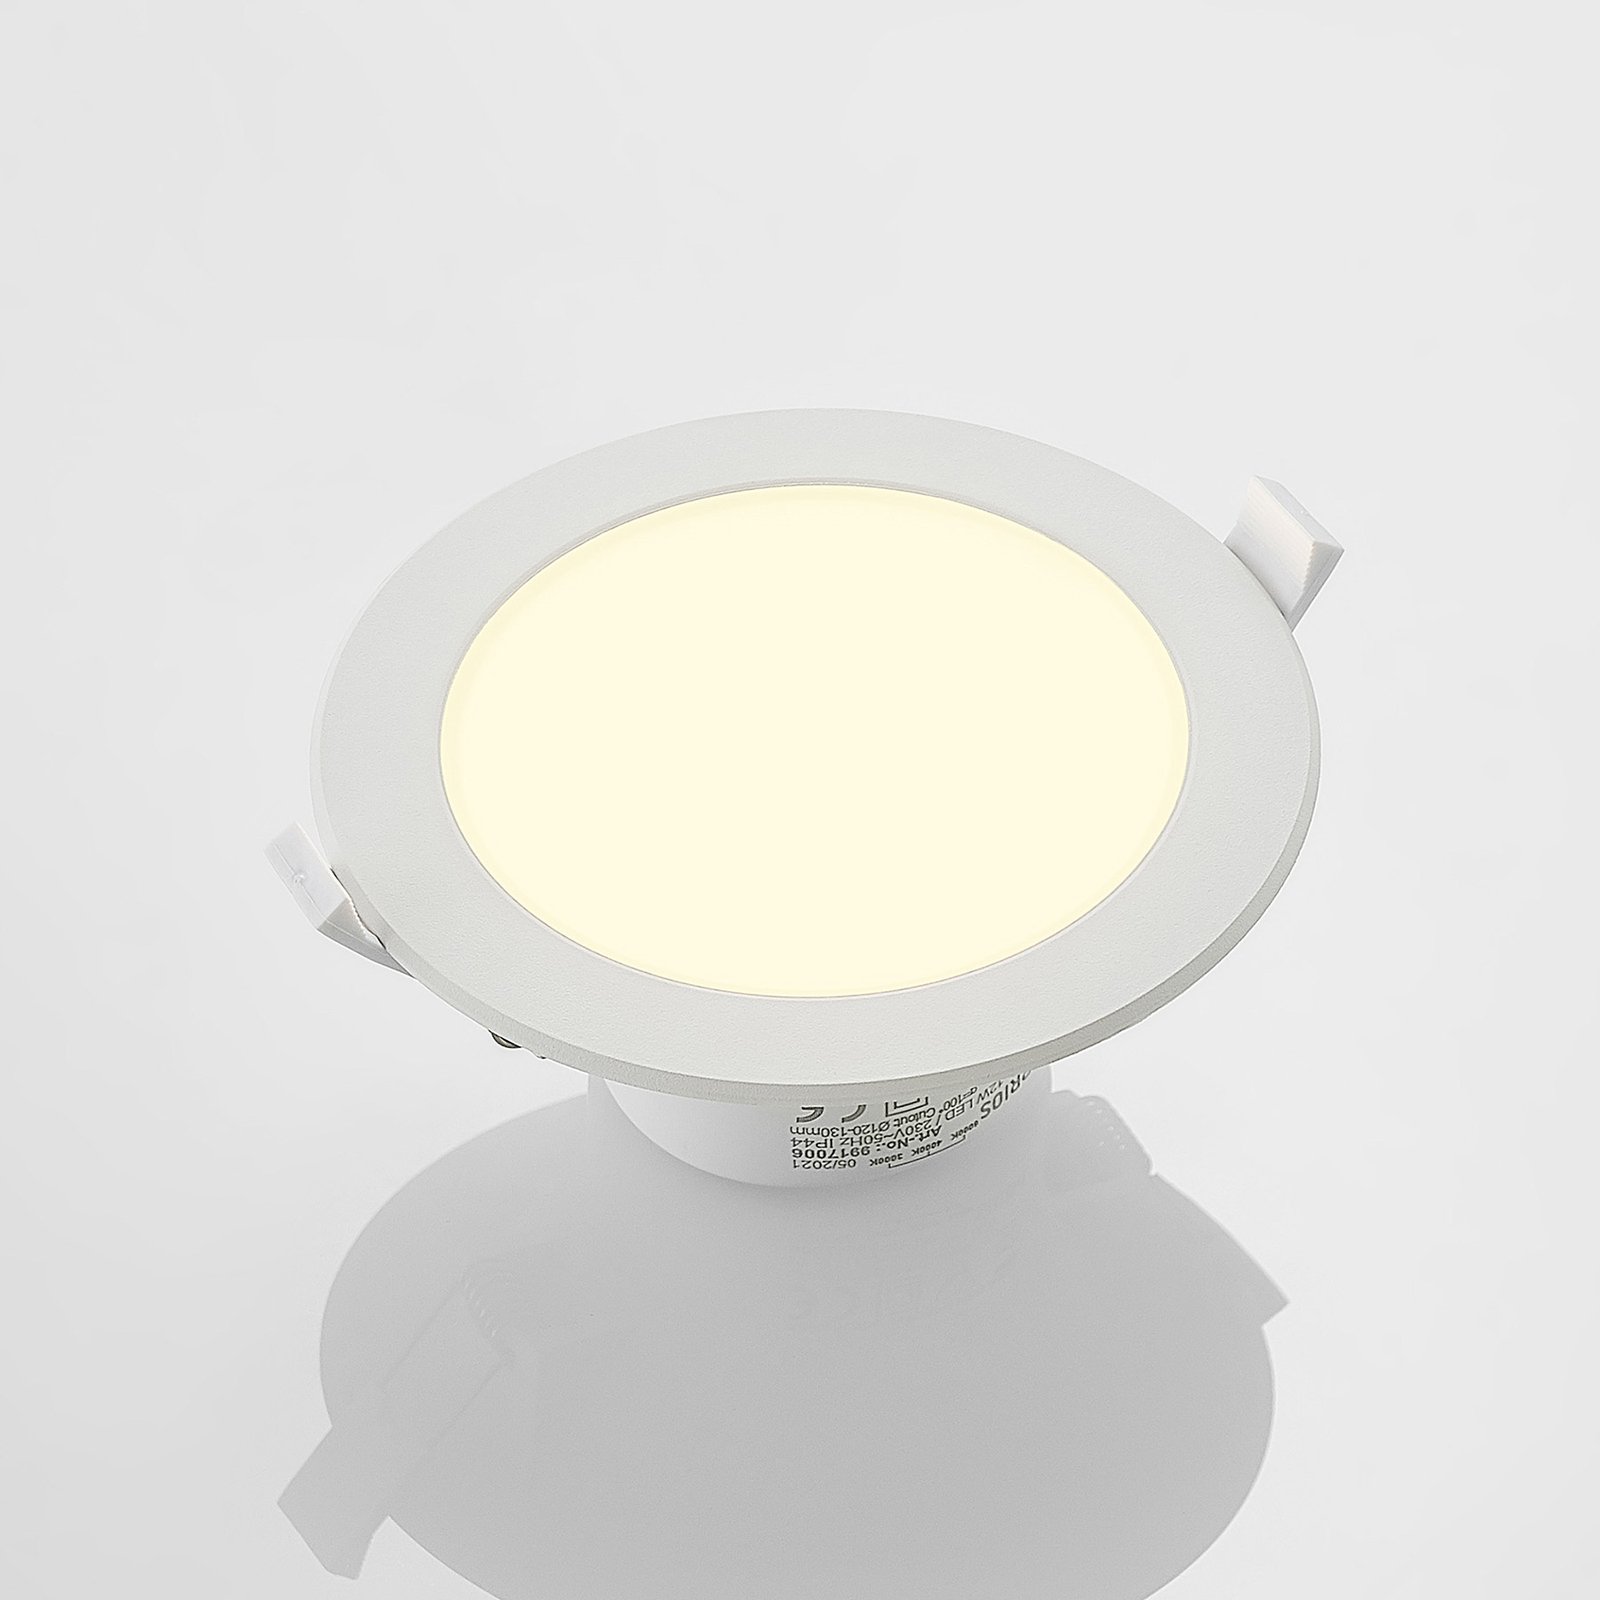 Prios LED-Einbaustrahler Rida, 14,5 cm, 12 W, CCT, dimmbar